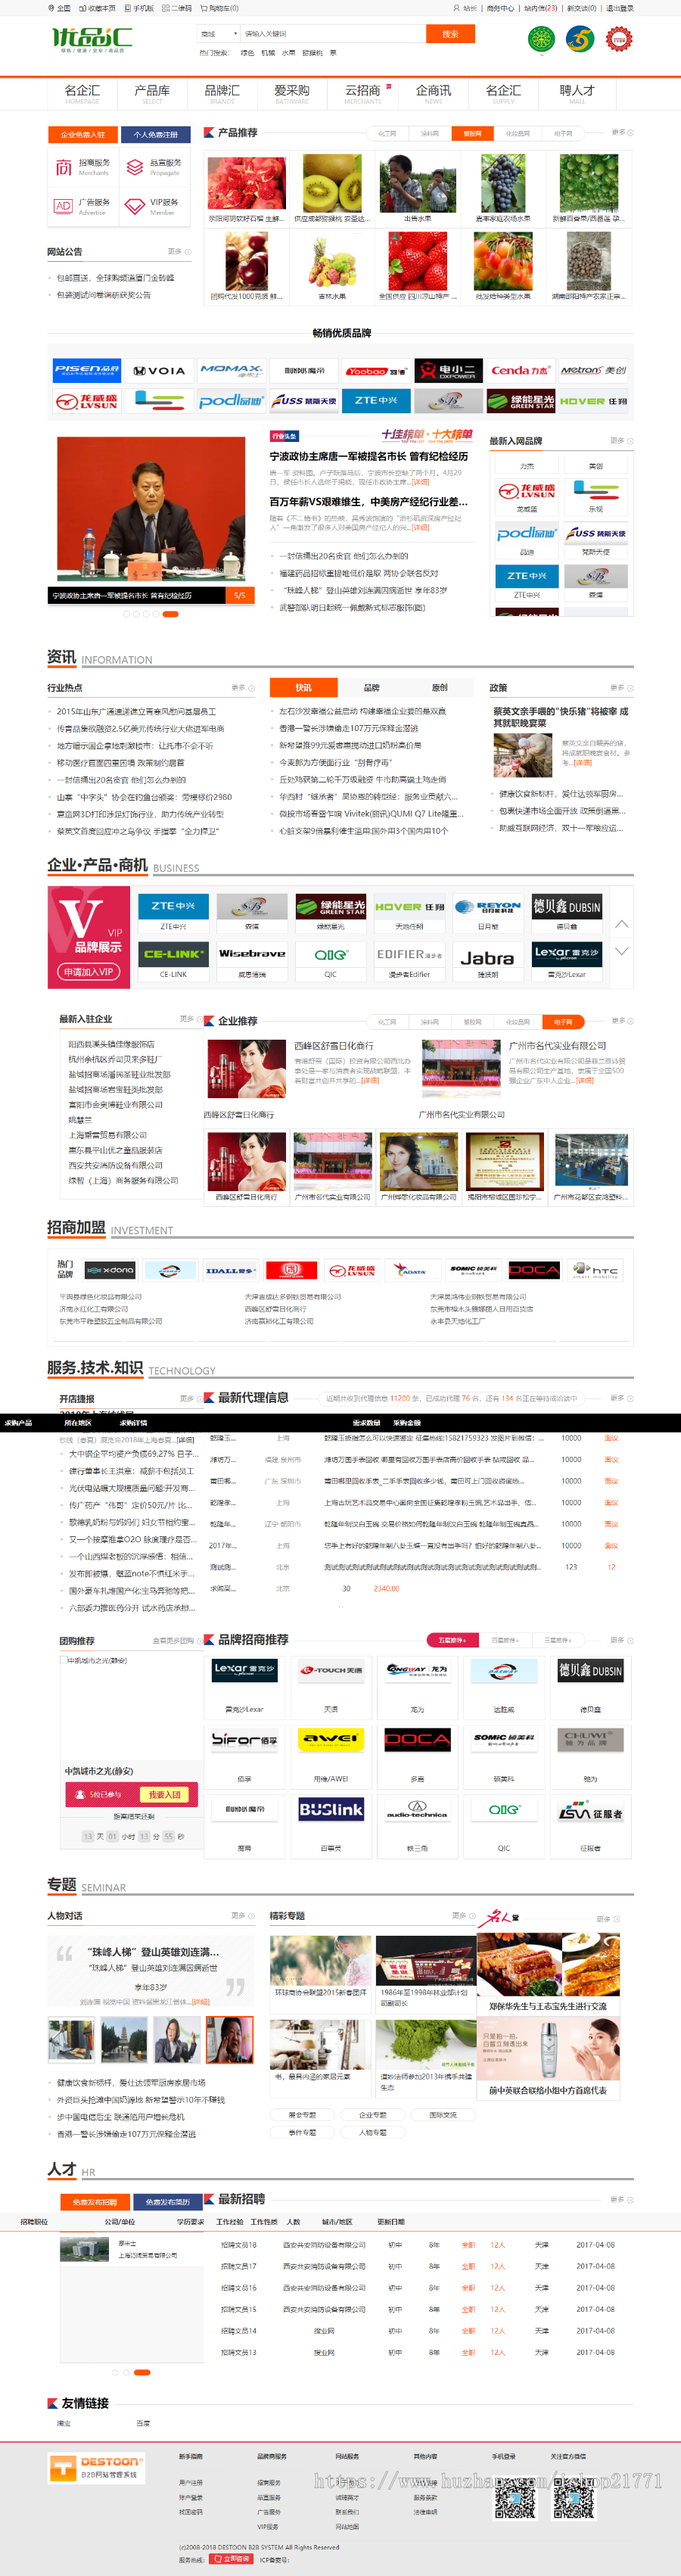 destoon7新闻资讯信息行业风格独特的白色B2B平台网站源码 dt11